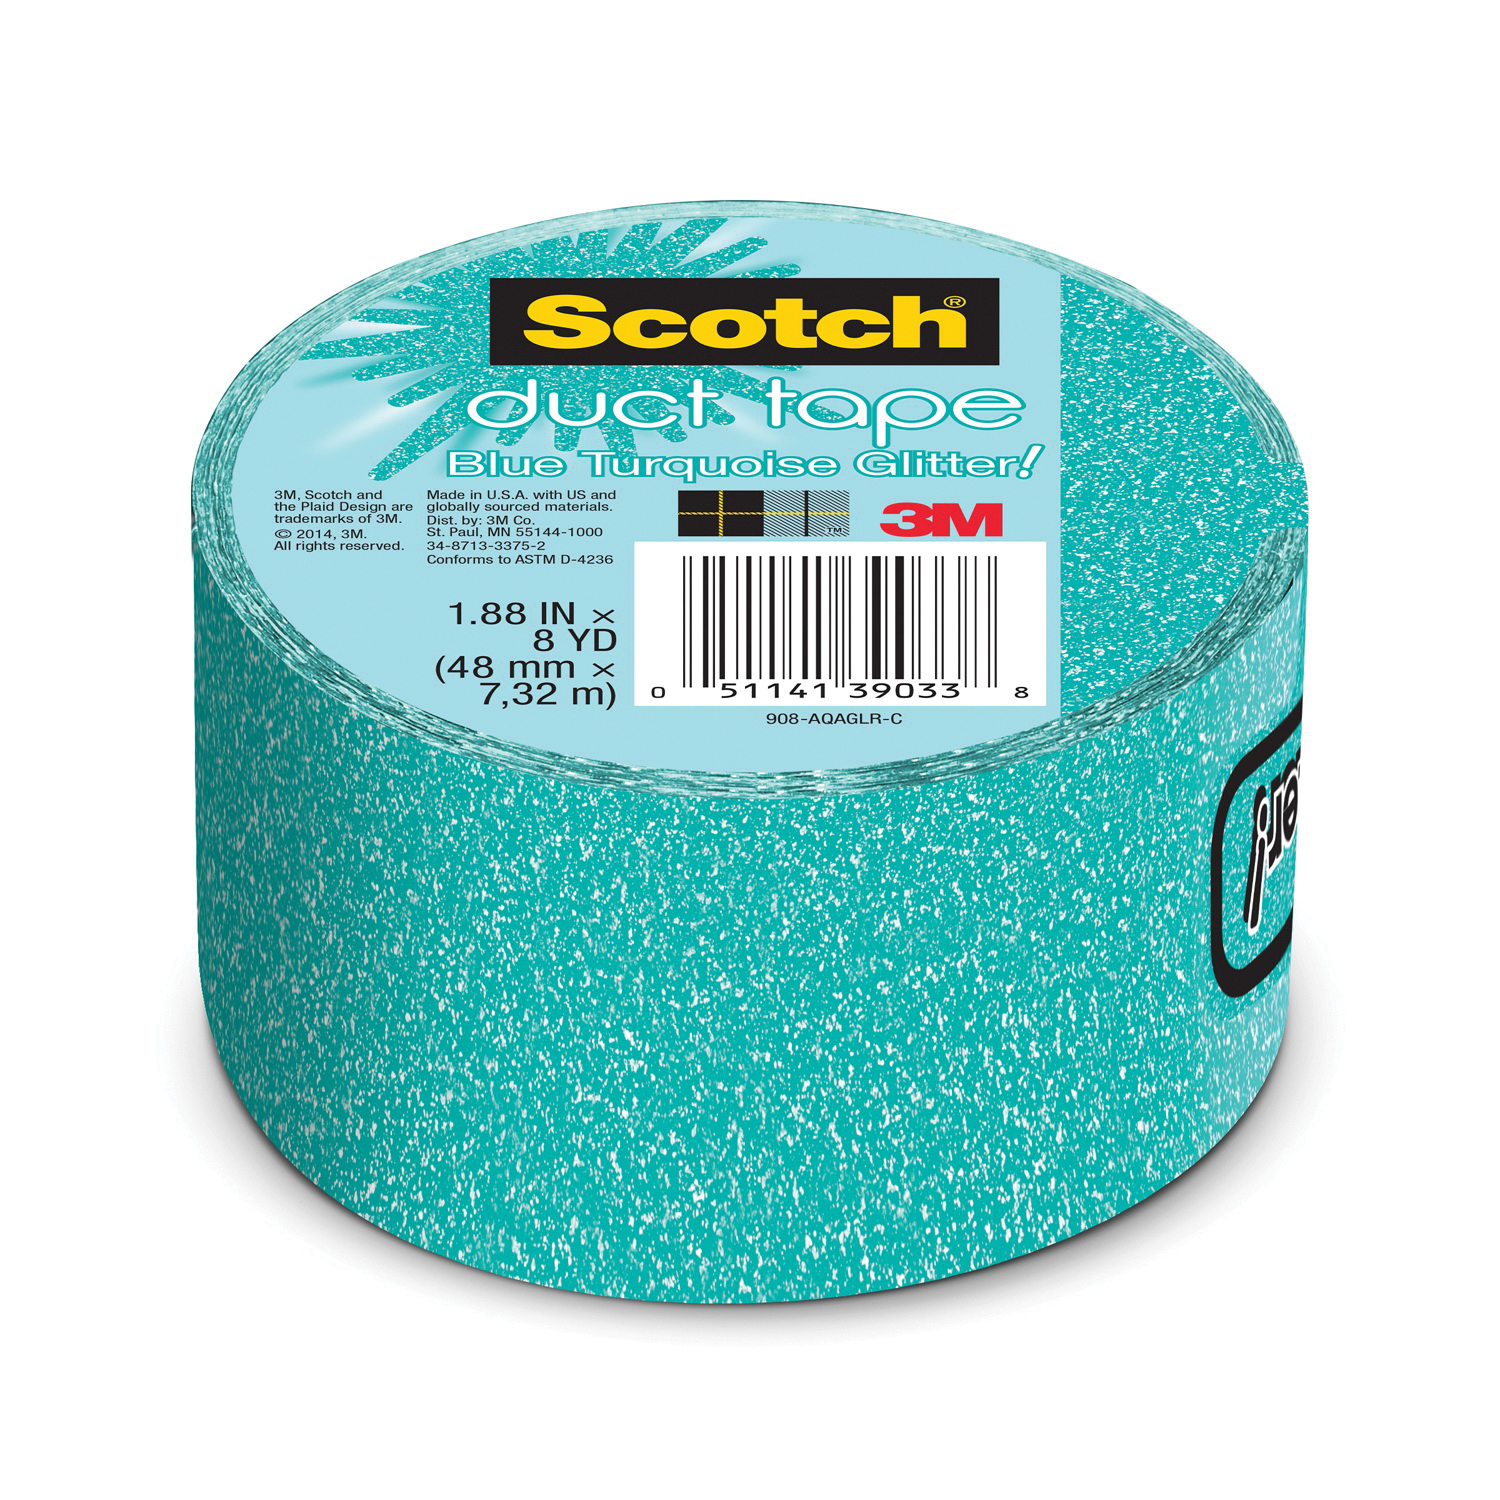 Scotch Duct Tape, 1.88 x 20 yds., Pink (920-PNK-C)